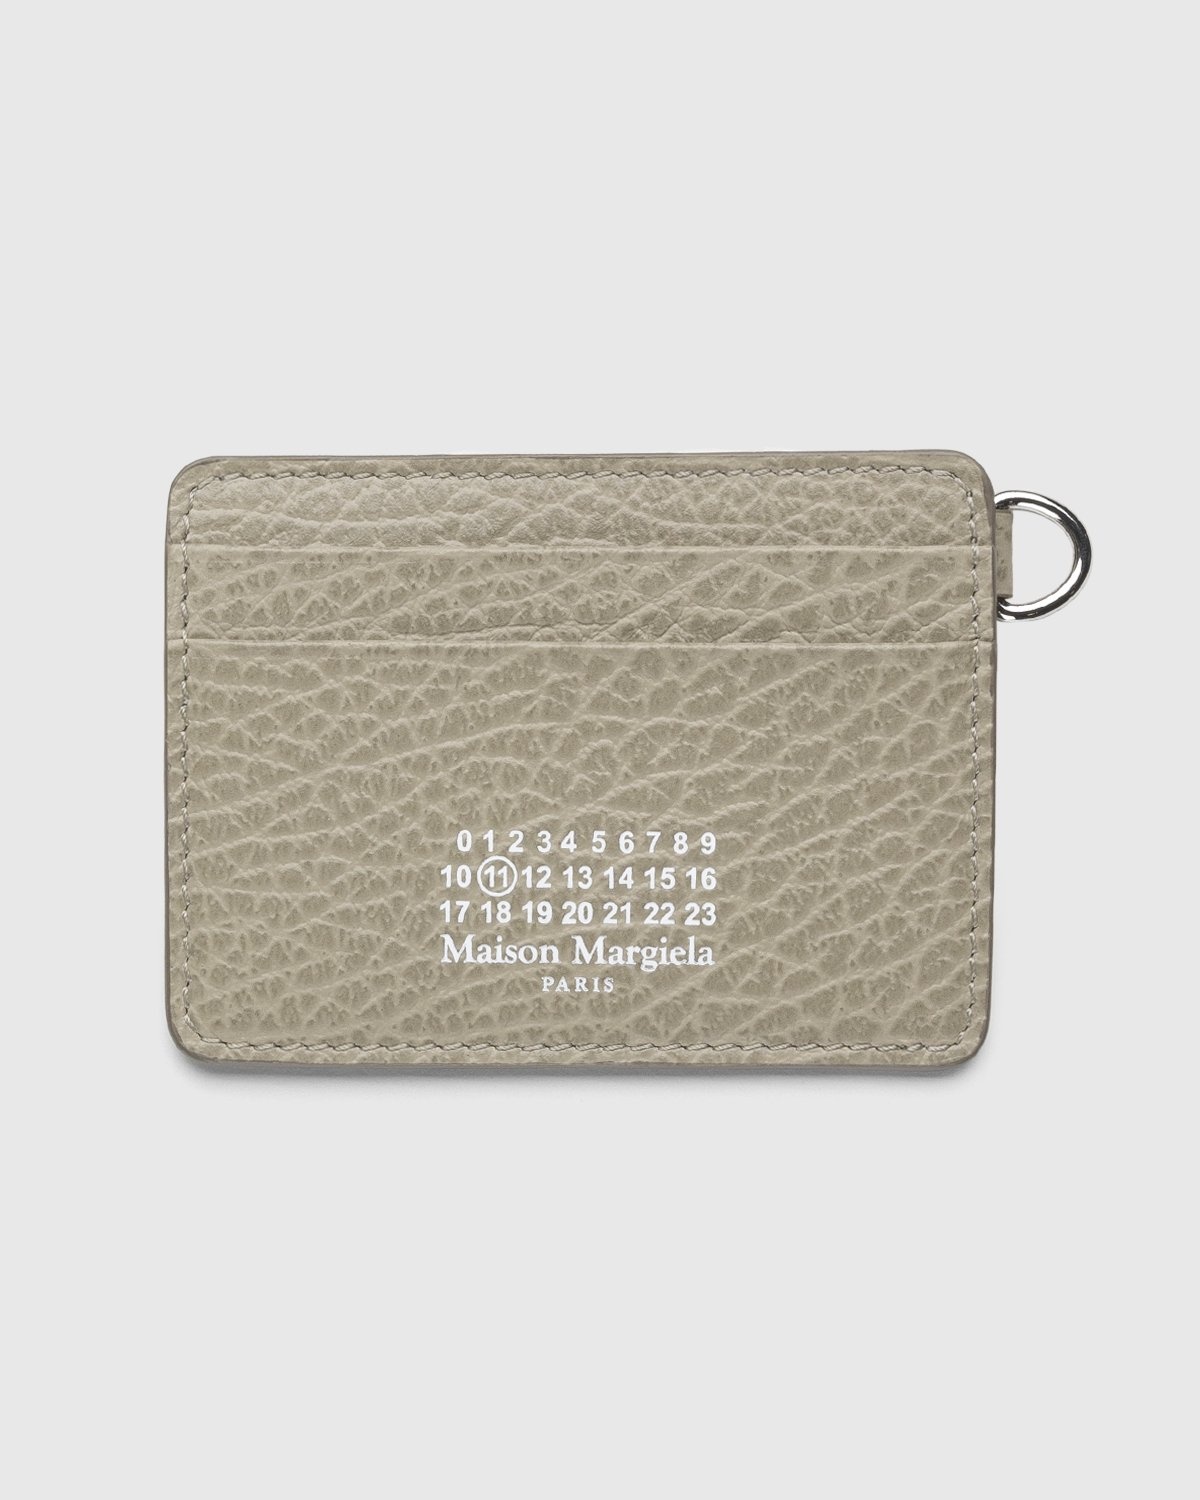 Maison Margiela – Leather Card Holder With Key Ring - Wallets - Black - Image 1